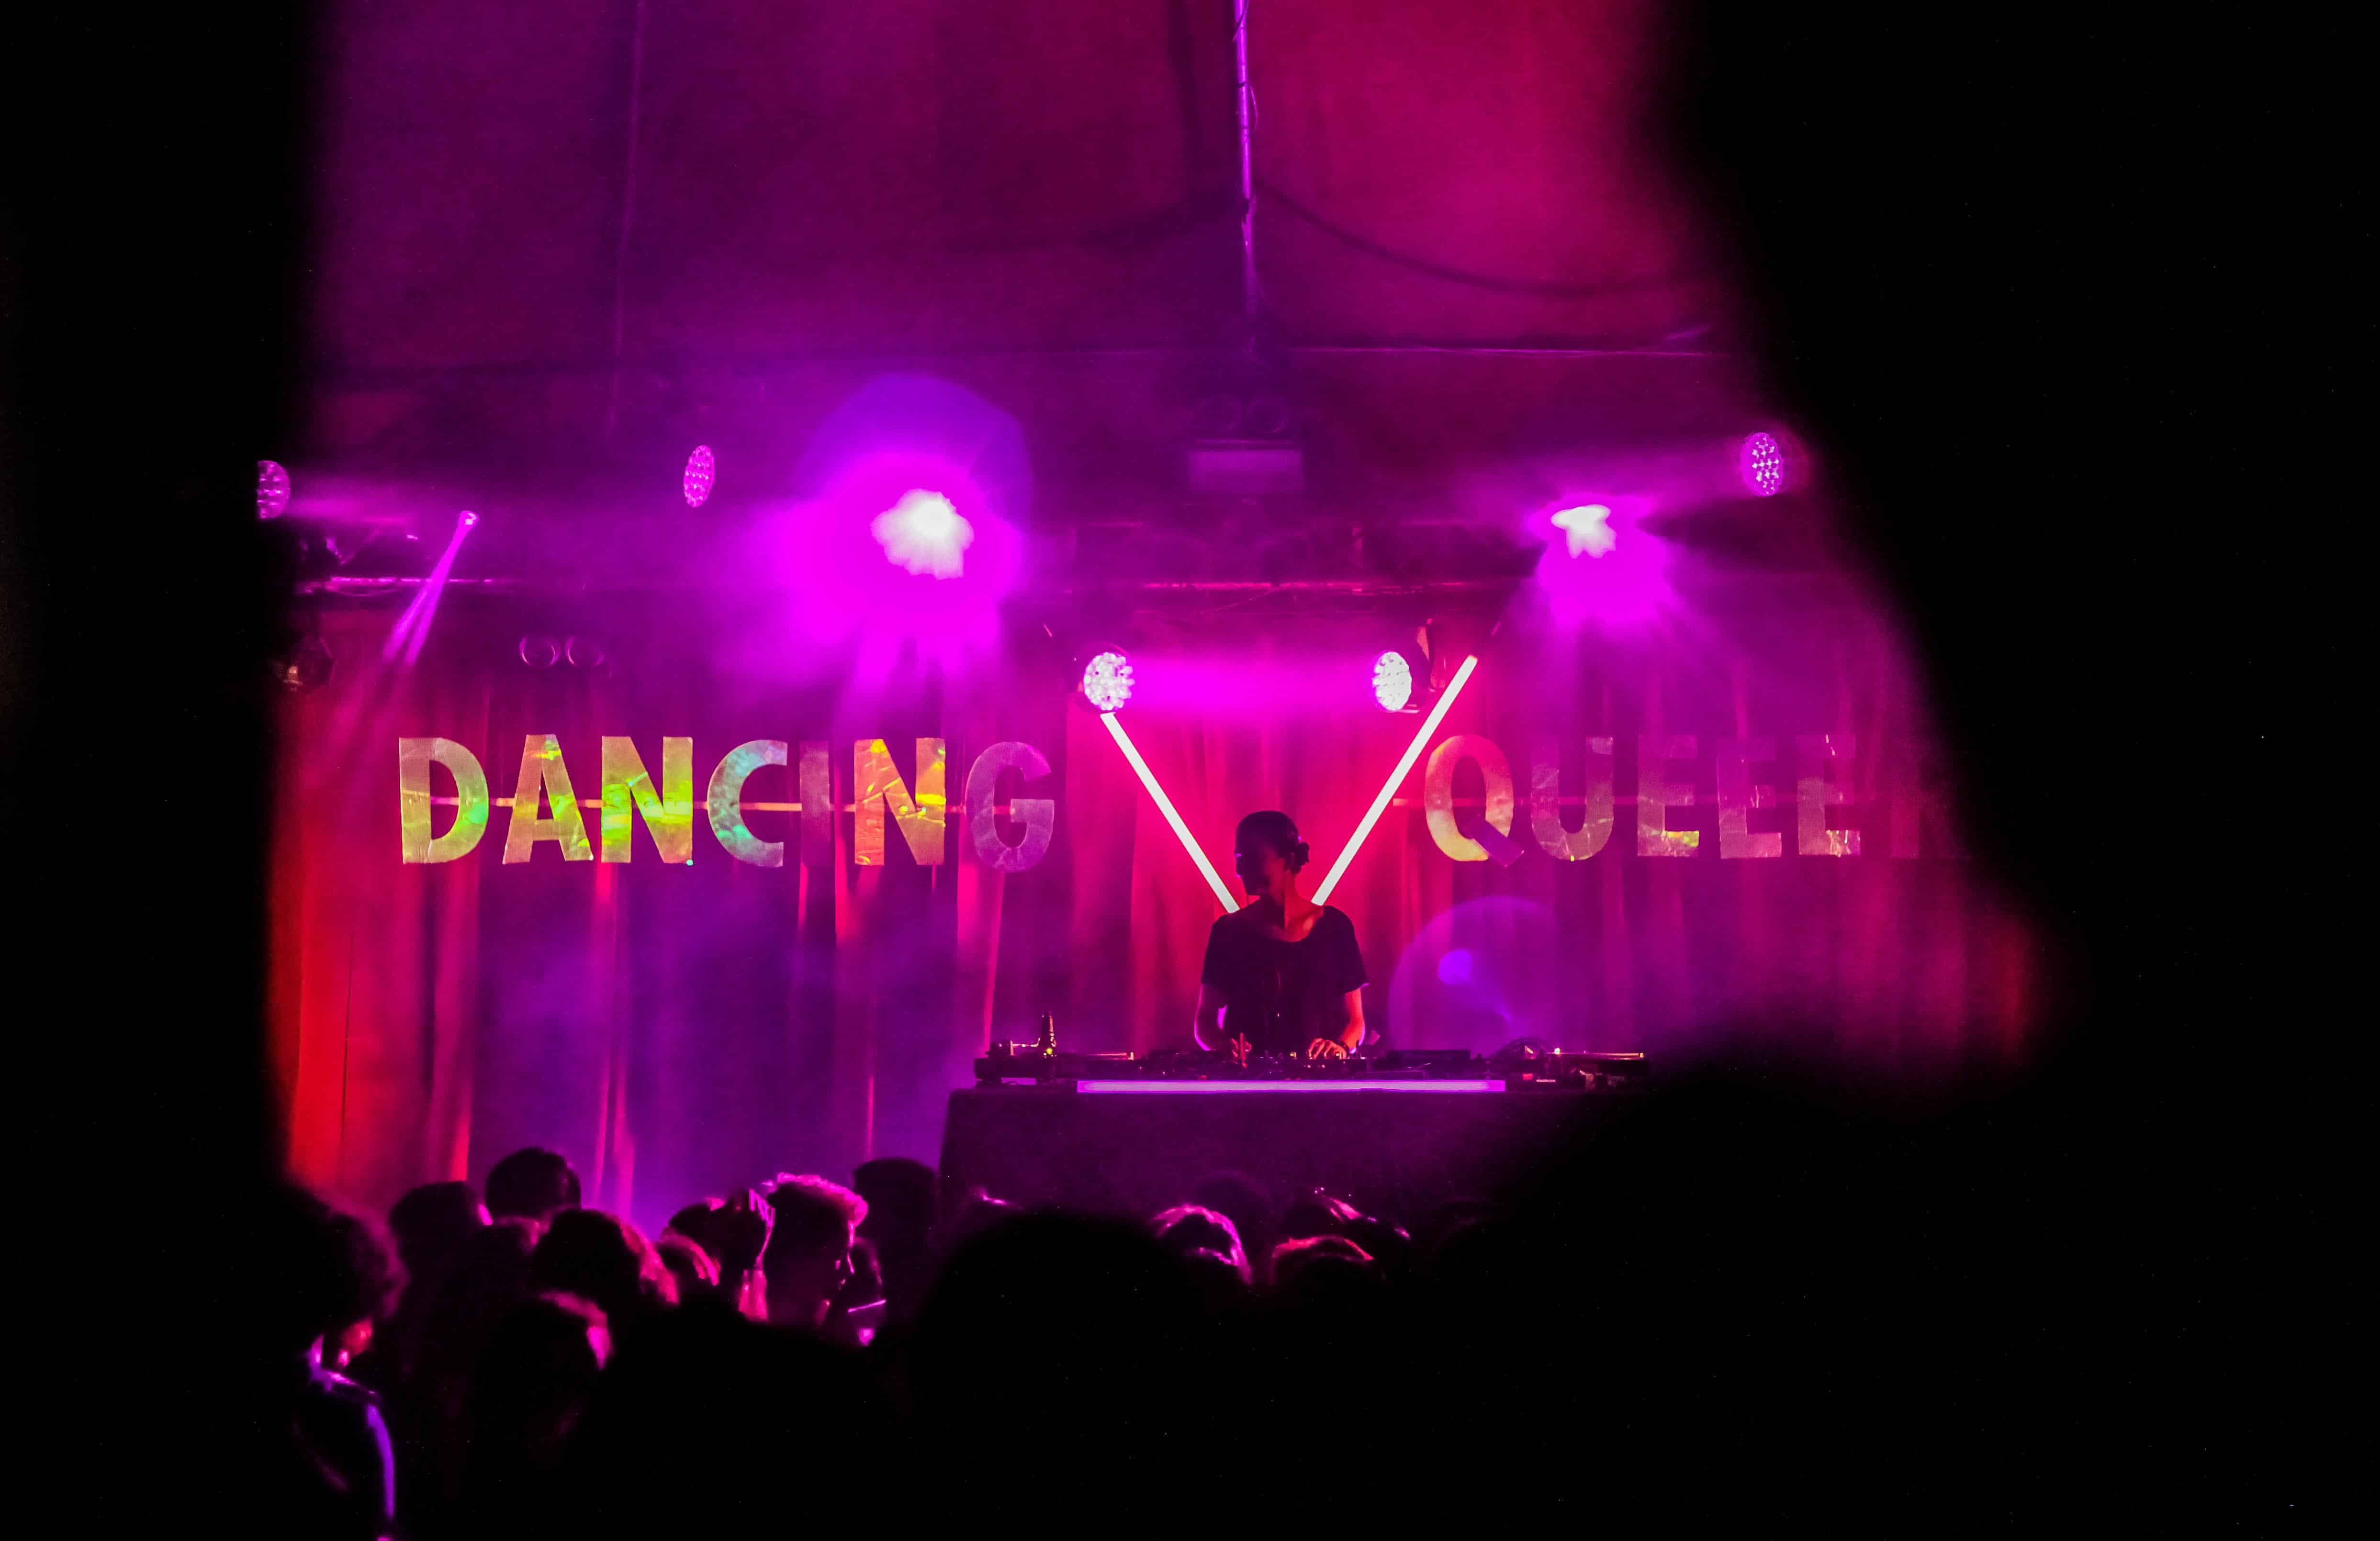 A DJ plays on a stage